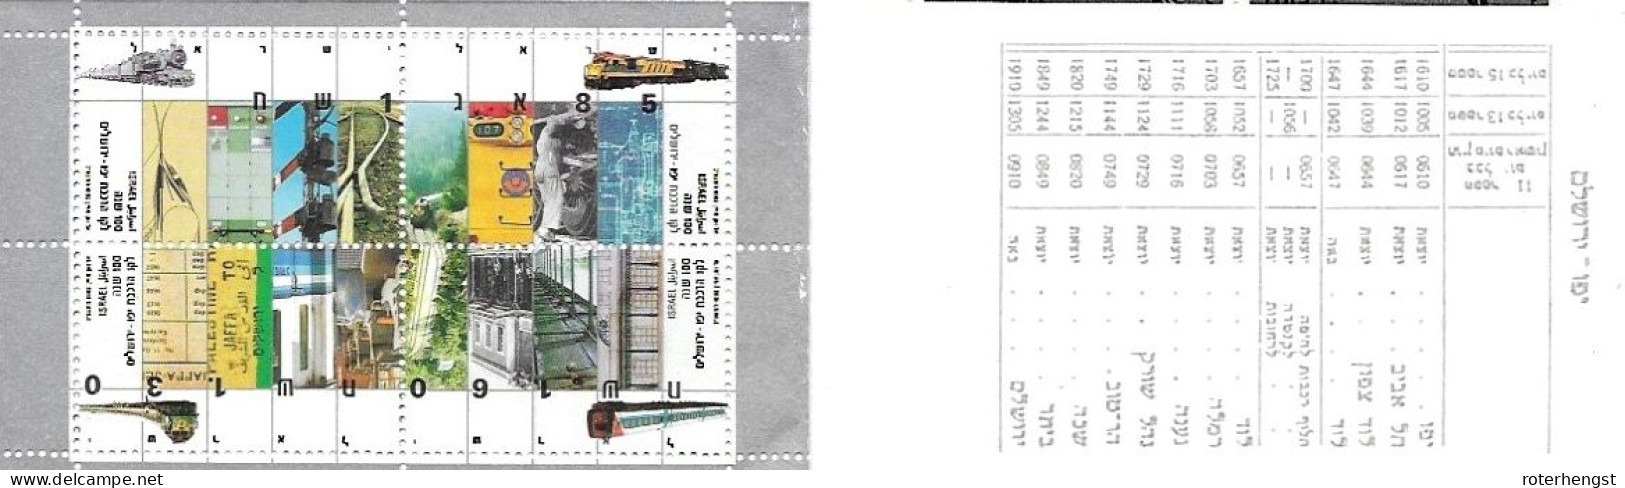 Israel Booklet Mnh ** 1992 15 Euros Train - Carnets